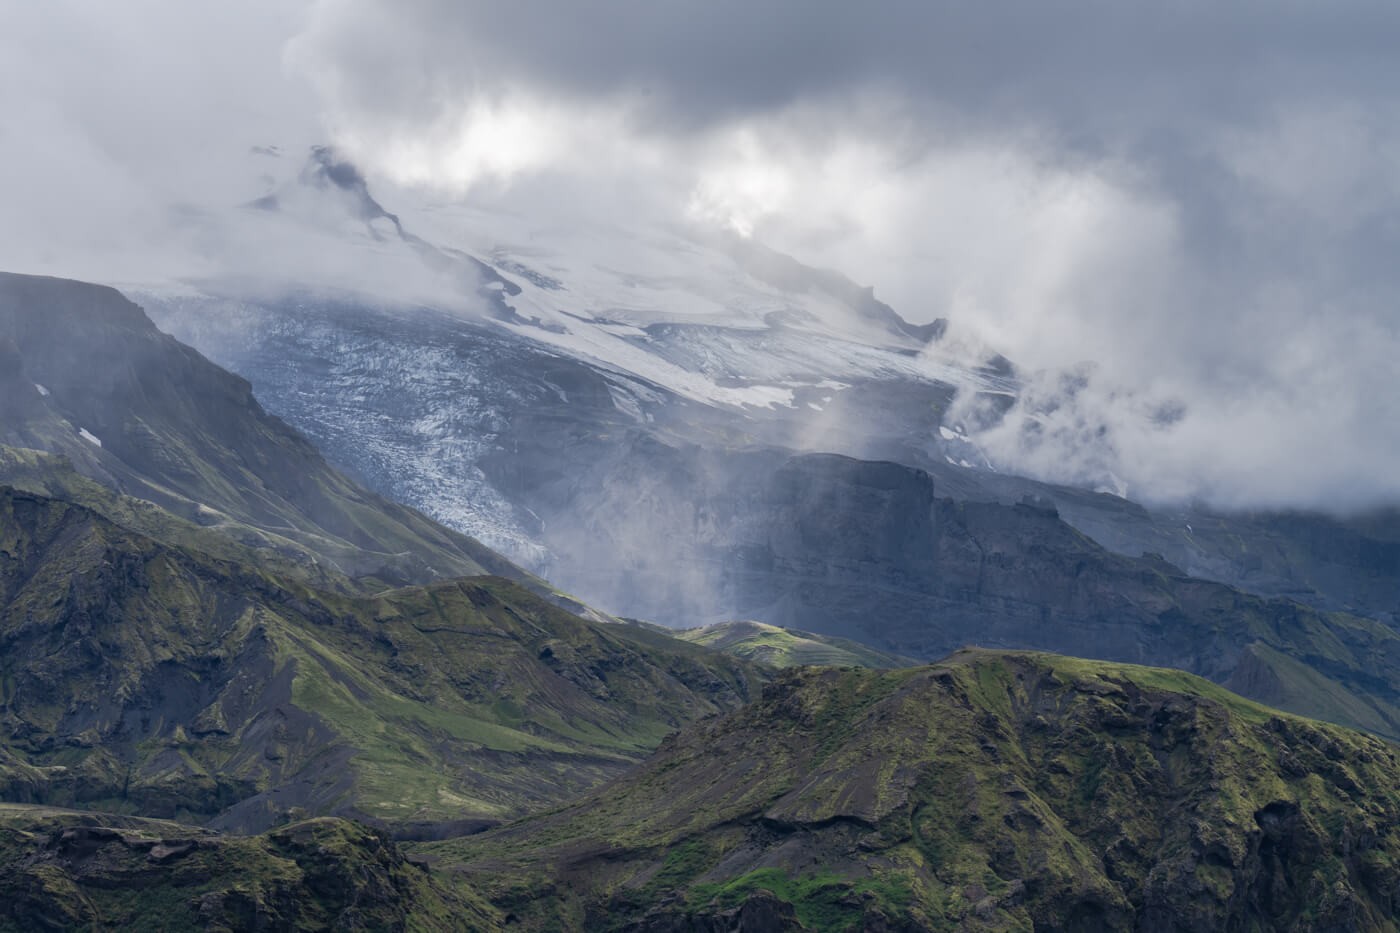 a glacier on a rocky landscape in Iceland in Thorsmork